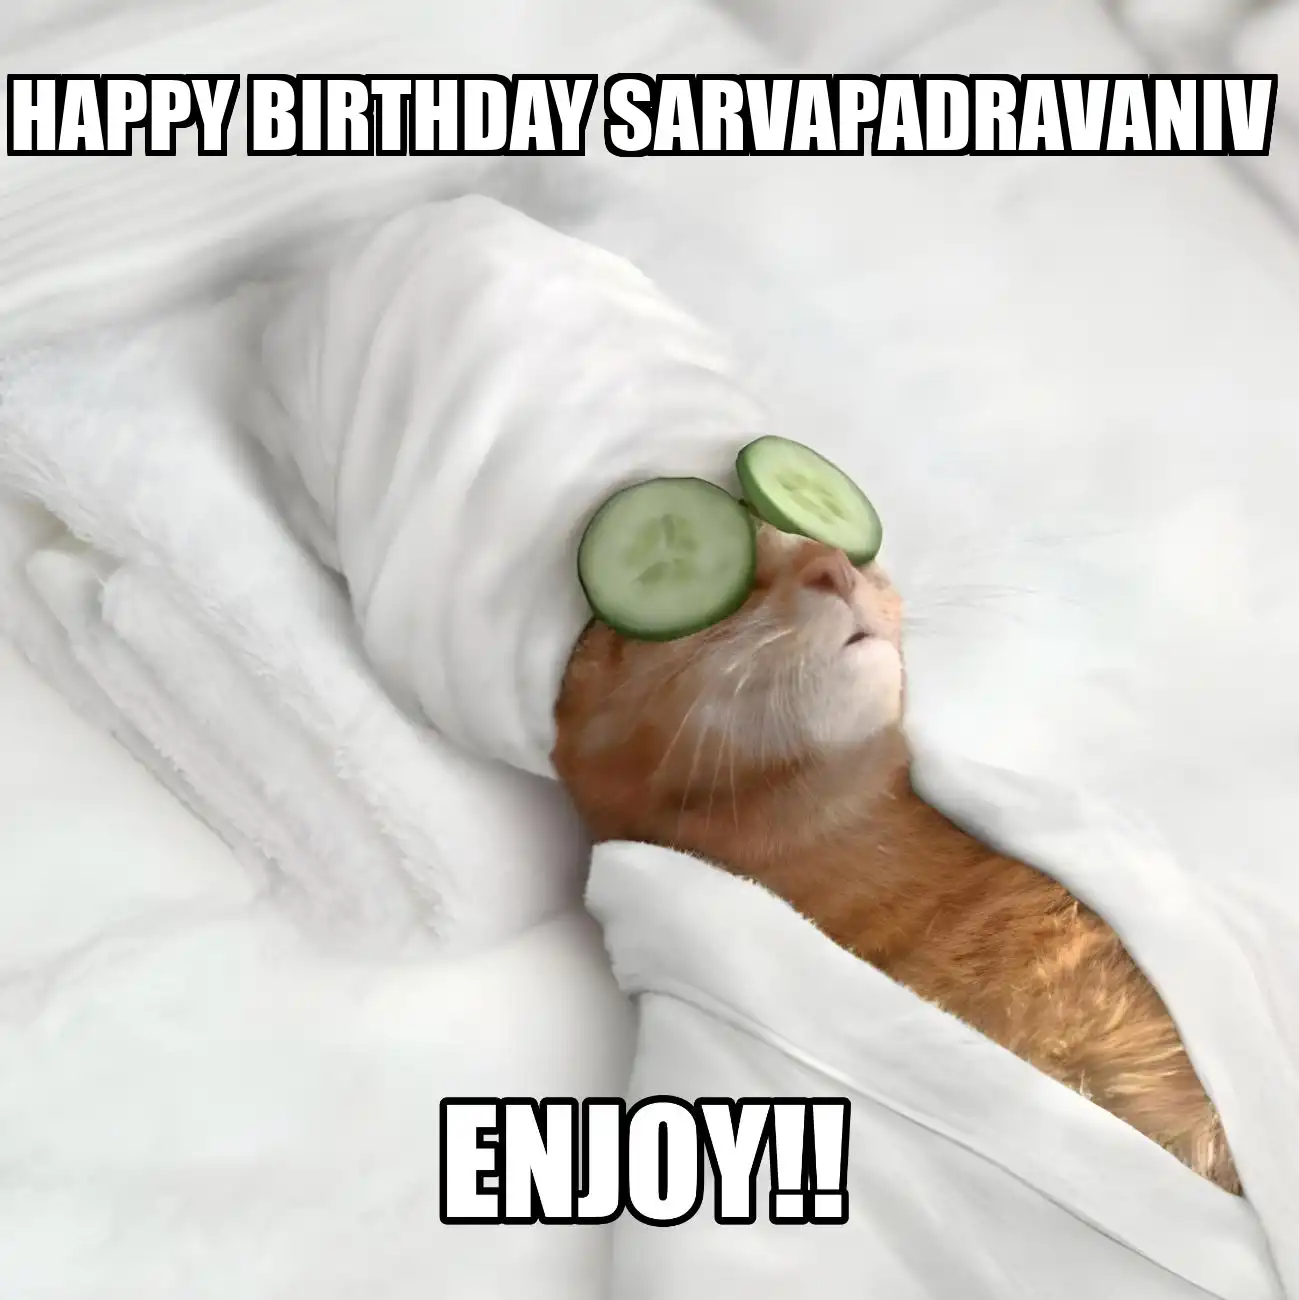 Happy Birthday Sarvapadravaniv Enjoy Cat Meme